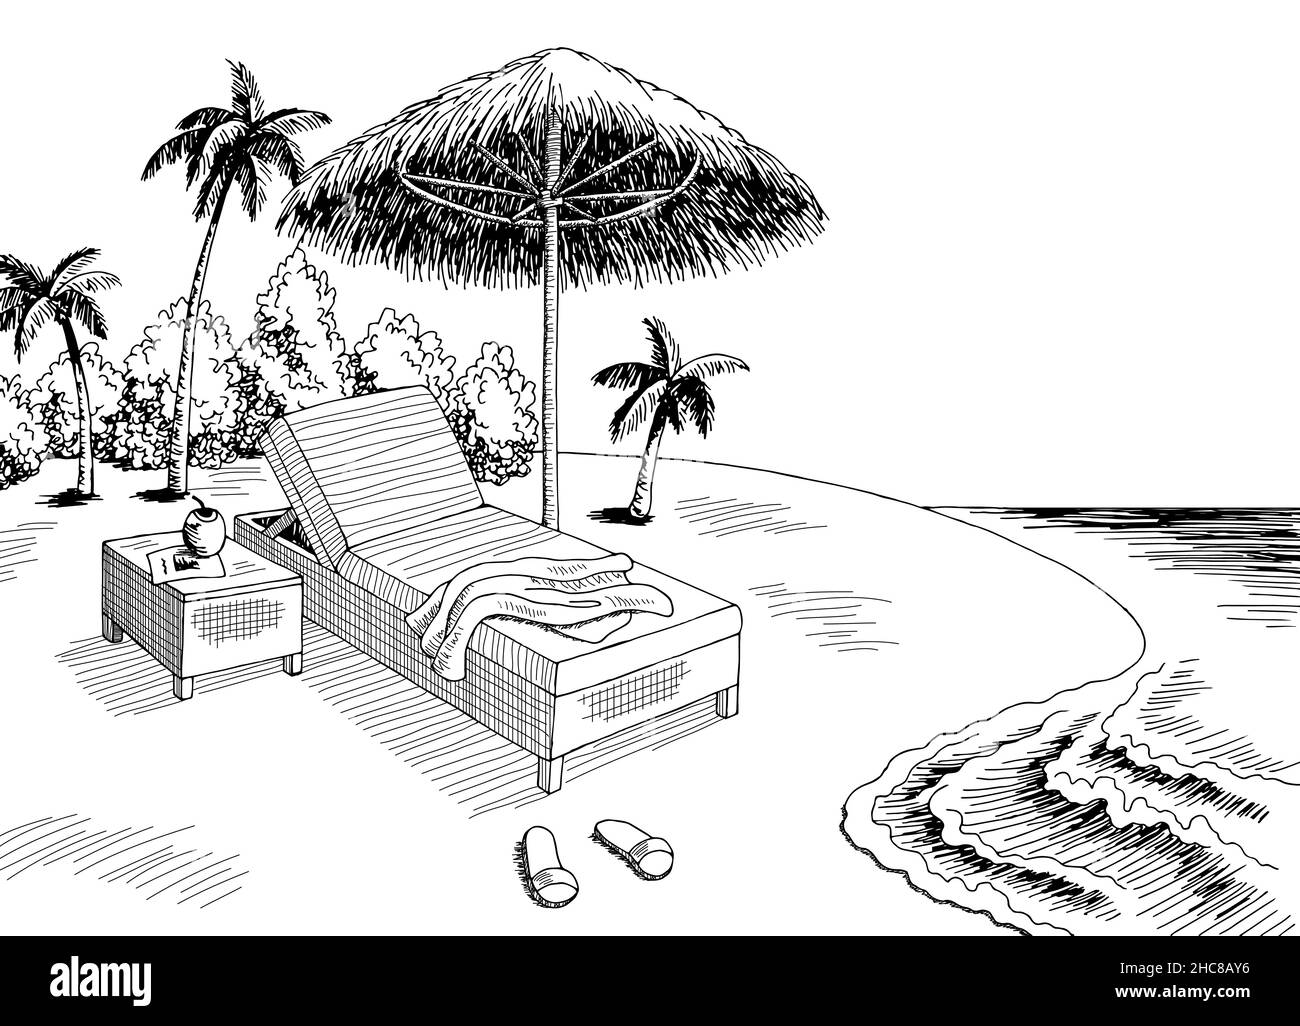 Strand Urlaub Grafik schwarz weiß Landschaft Skizze Illustration Vektor Stock Vektor